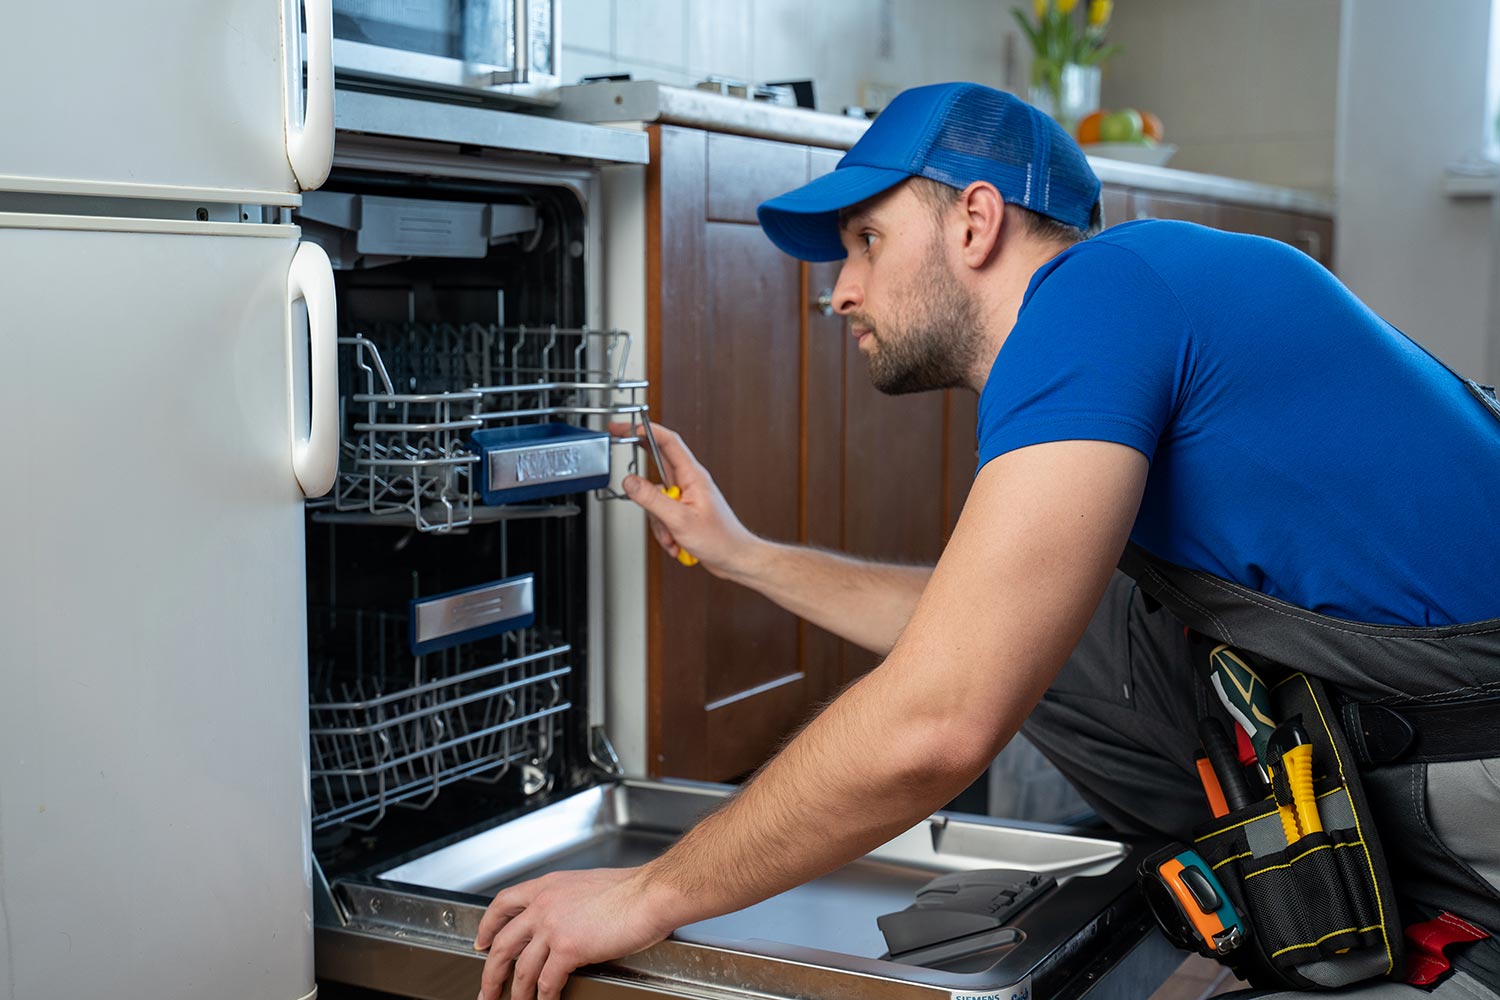 Repairman repairing dishwasher in kitchen